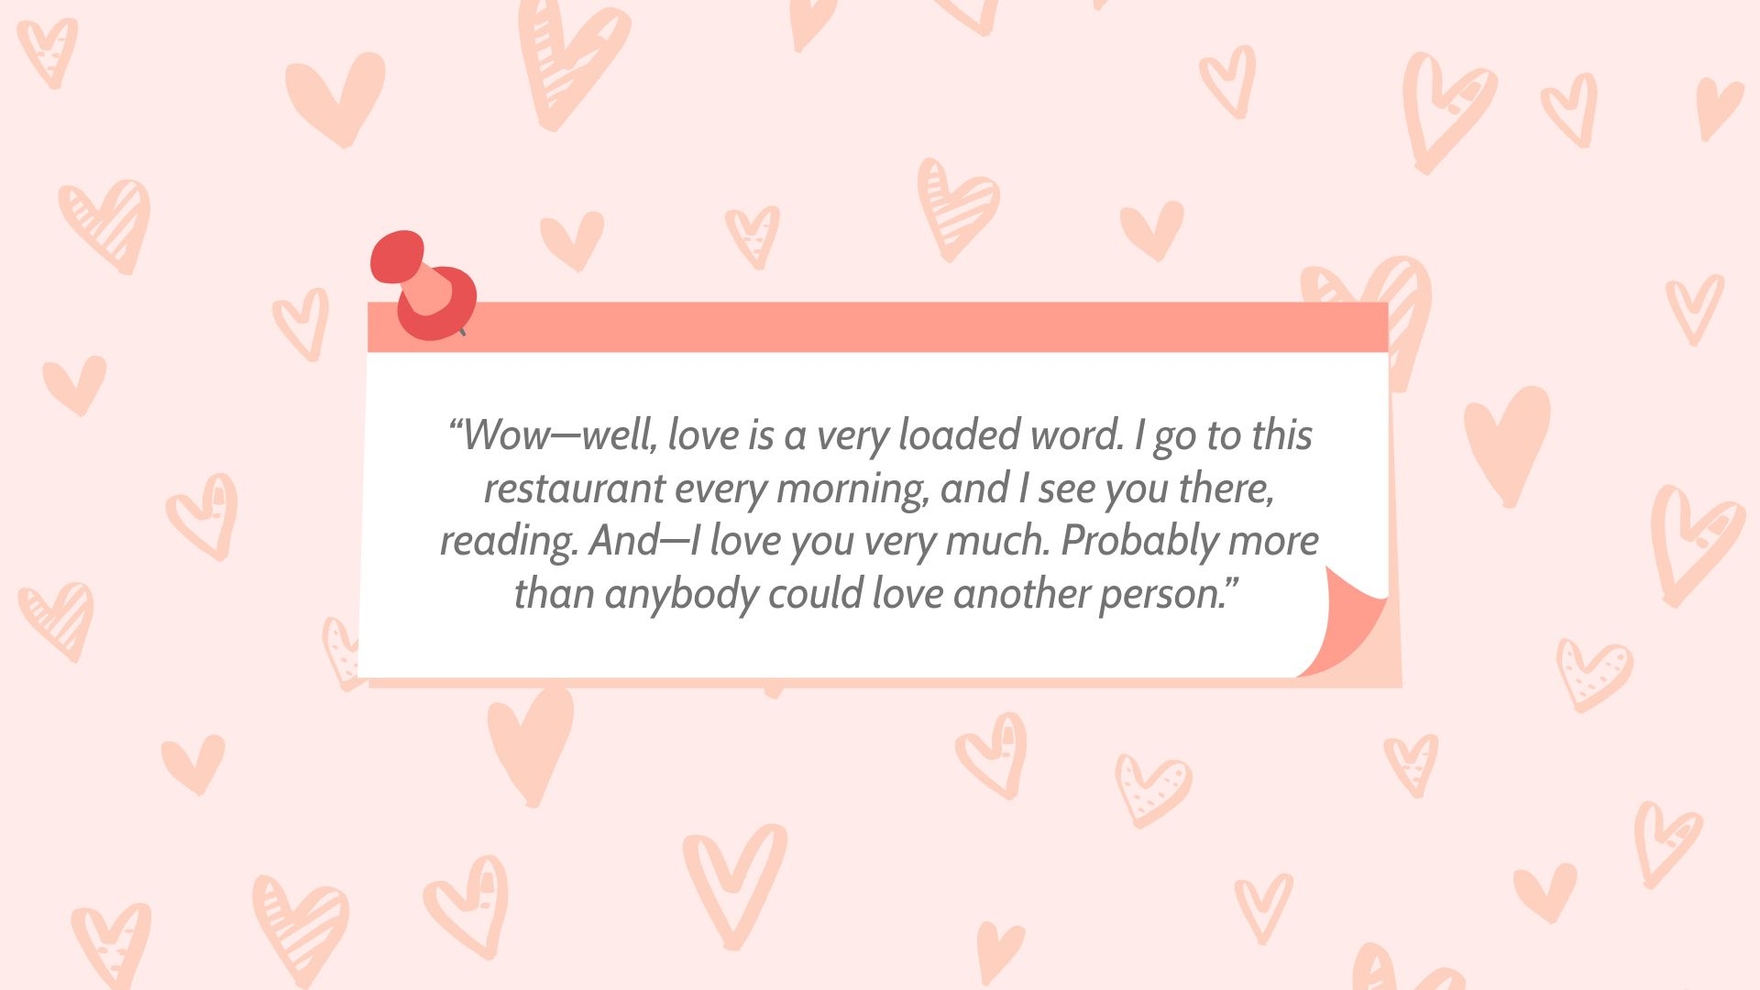 Valentine's Day Date Love Presentation